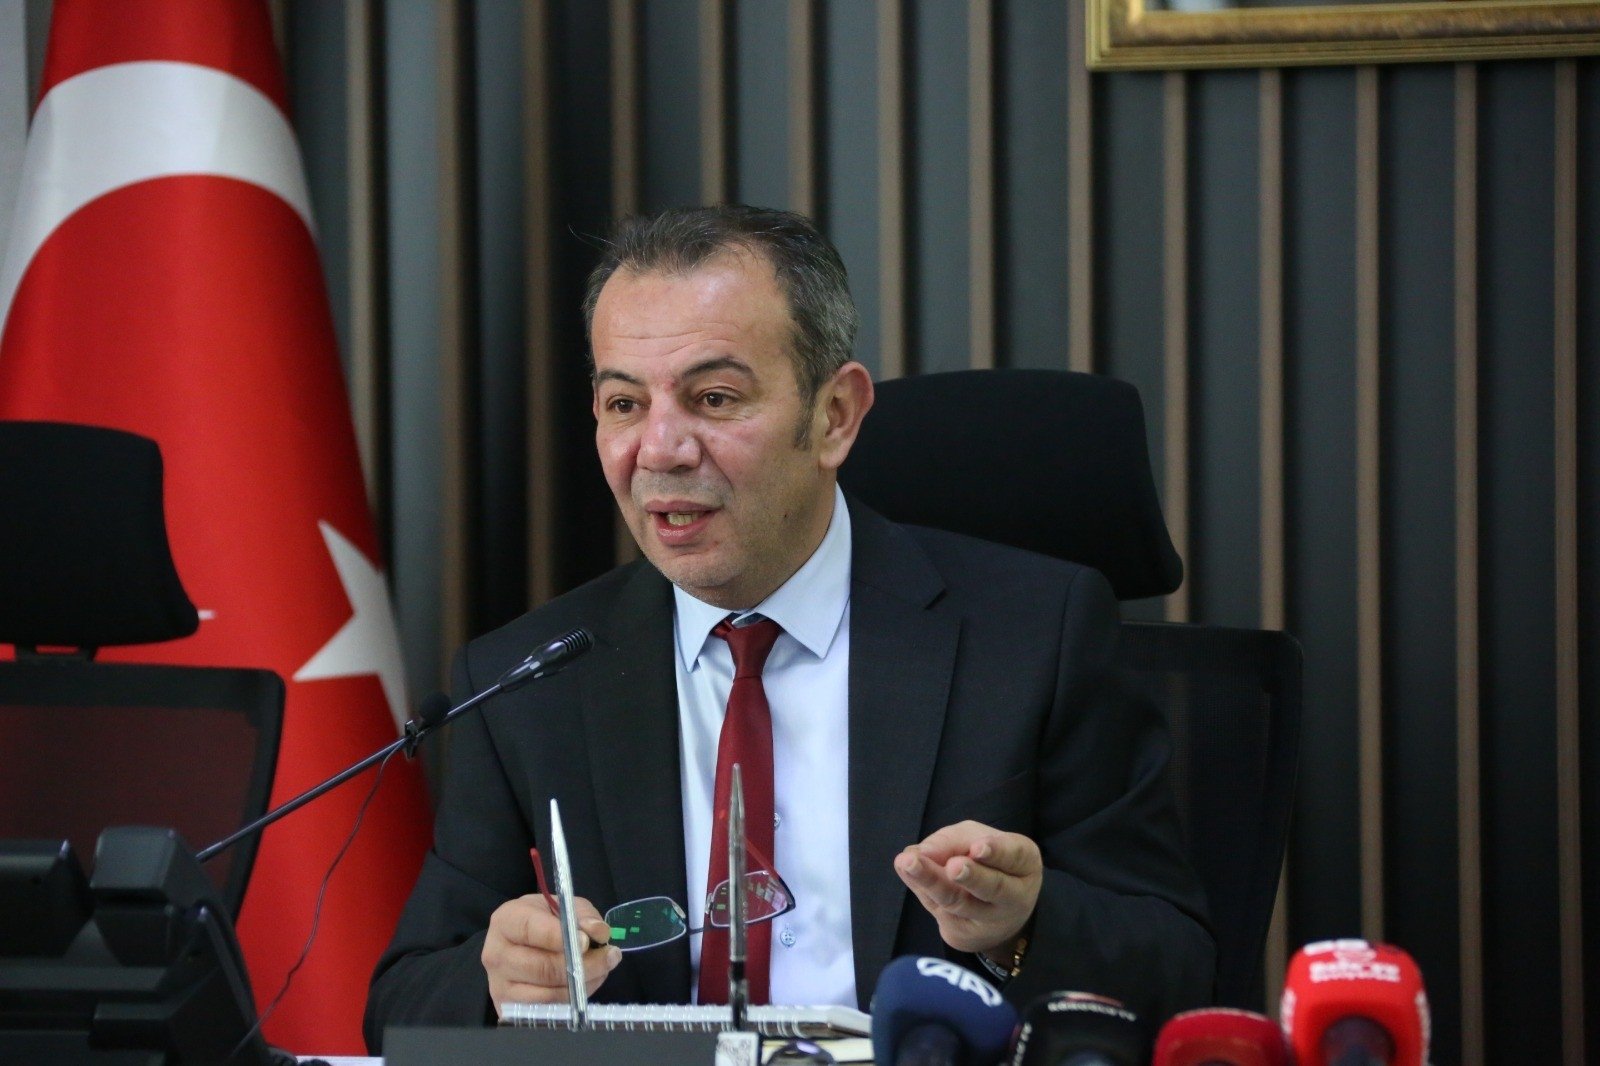 Bolu Mayor Tanju Özcan is seen speaking at the municipality in Bolu, Turkey, Nov. 23, 2021. (IHA Photo)